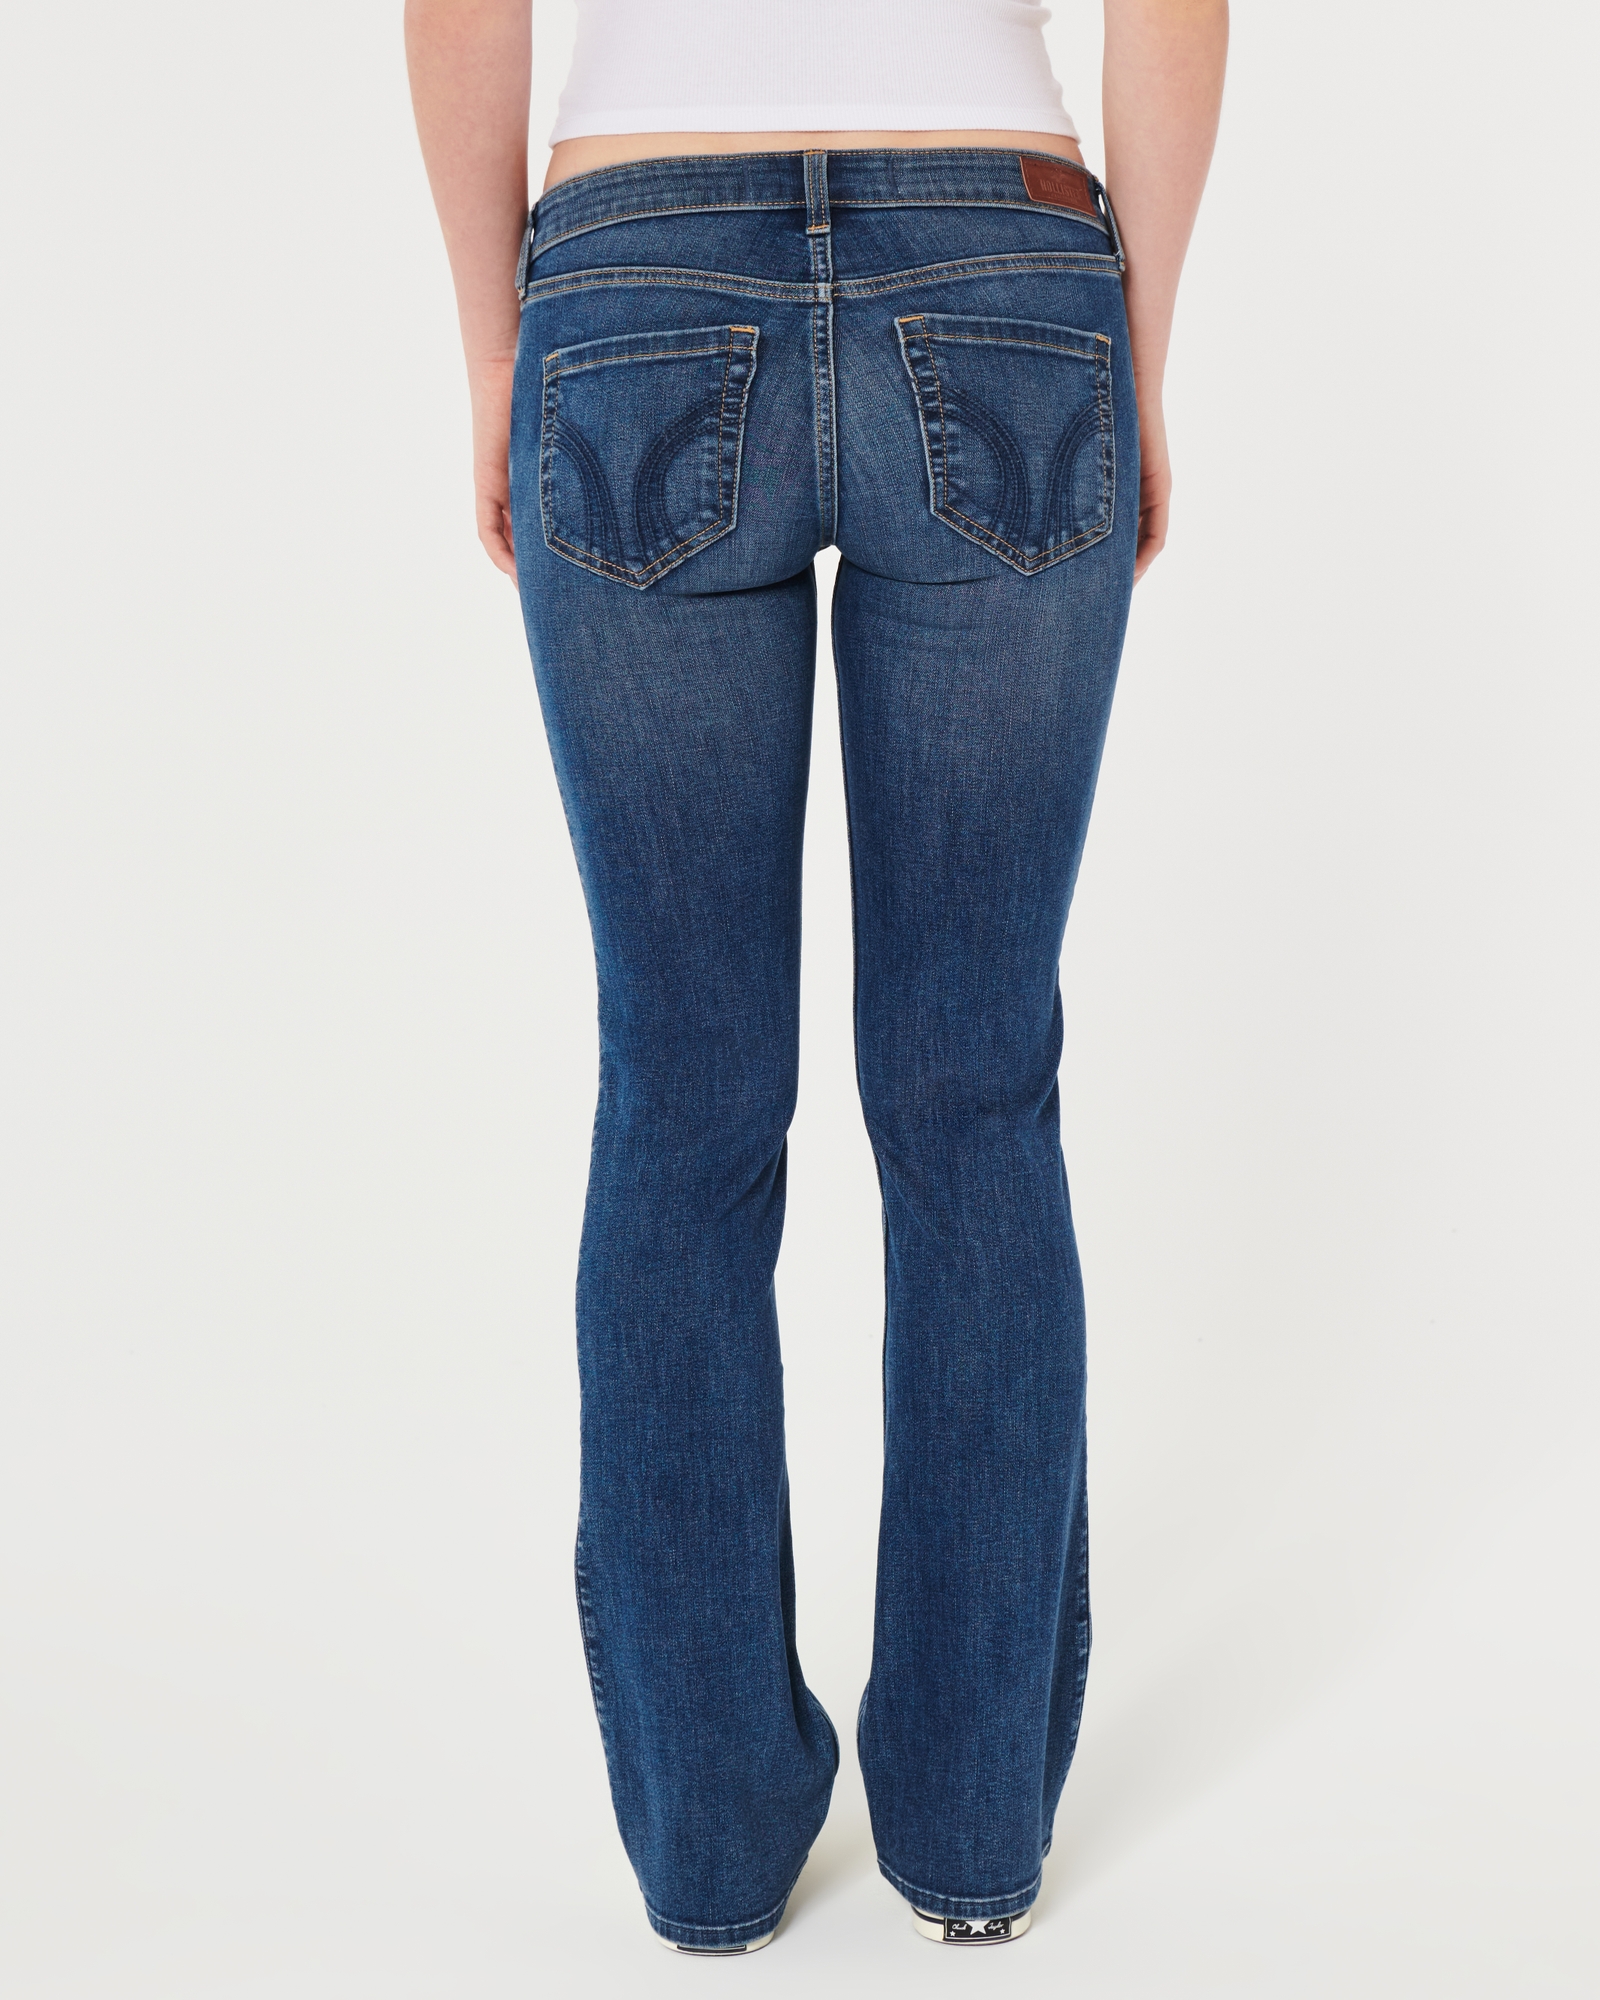 Suko Jeans Womens Size 6 Low Rise Slim Bootcut Dark Wash Blue Denim W26 x  L30.5